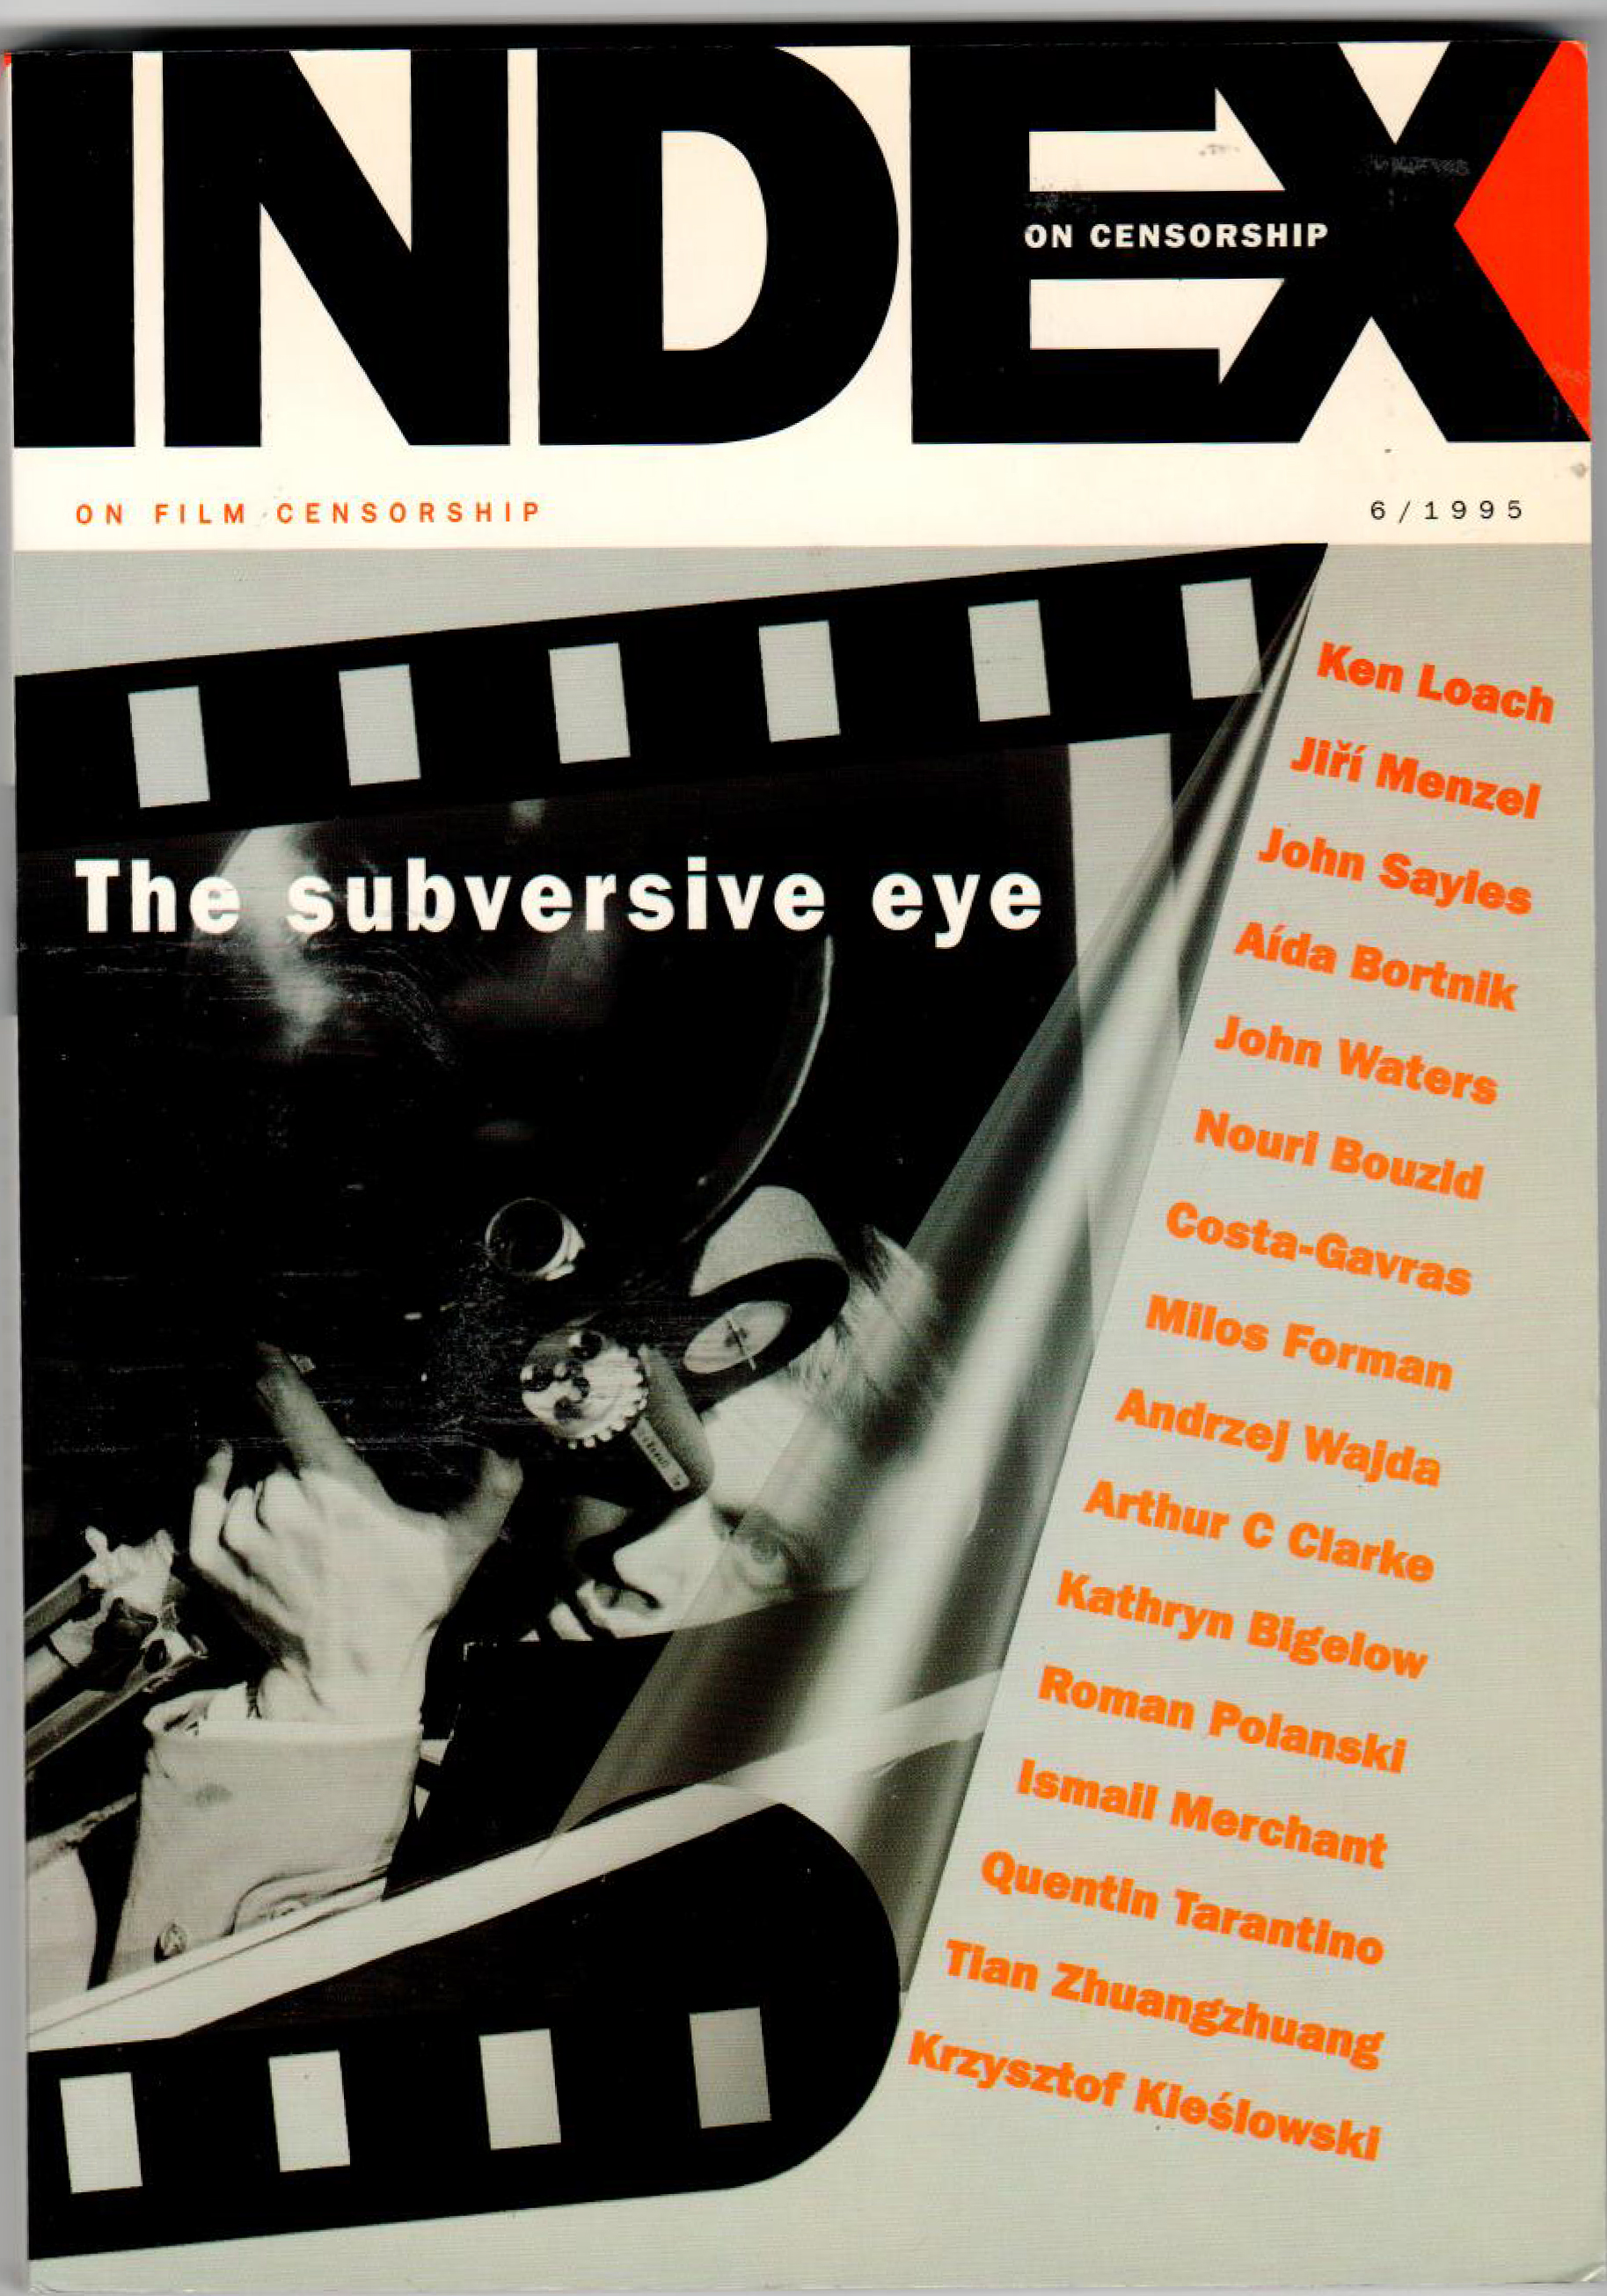 The subversive eye, the January 1995 edition of Index on Censorship magazine.